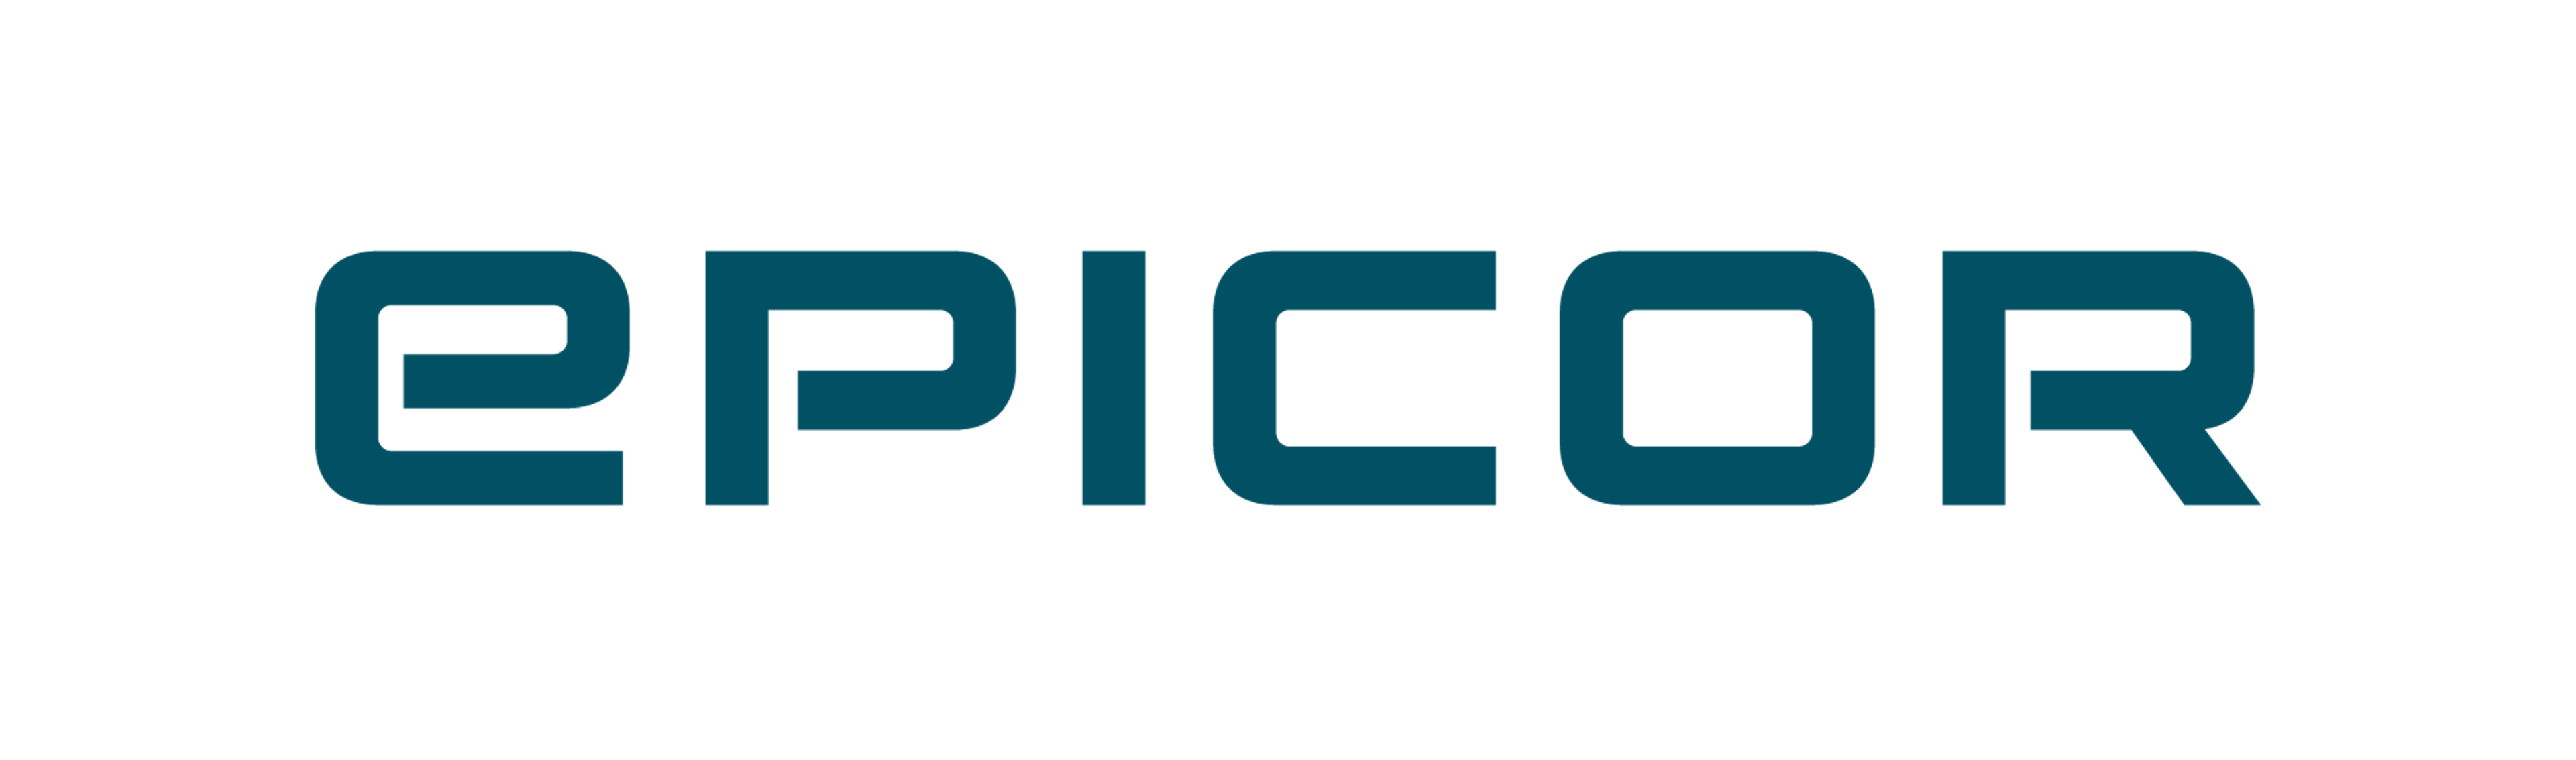 Epicor BisTrack Logo